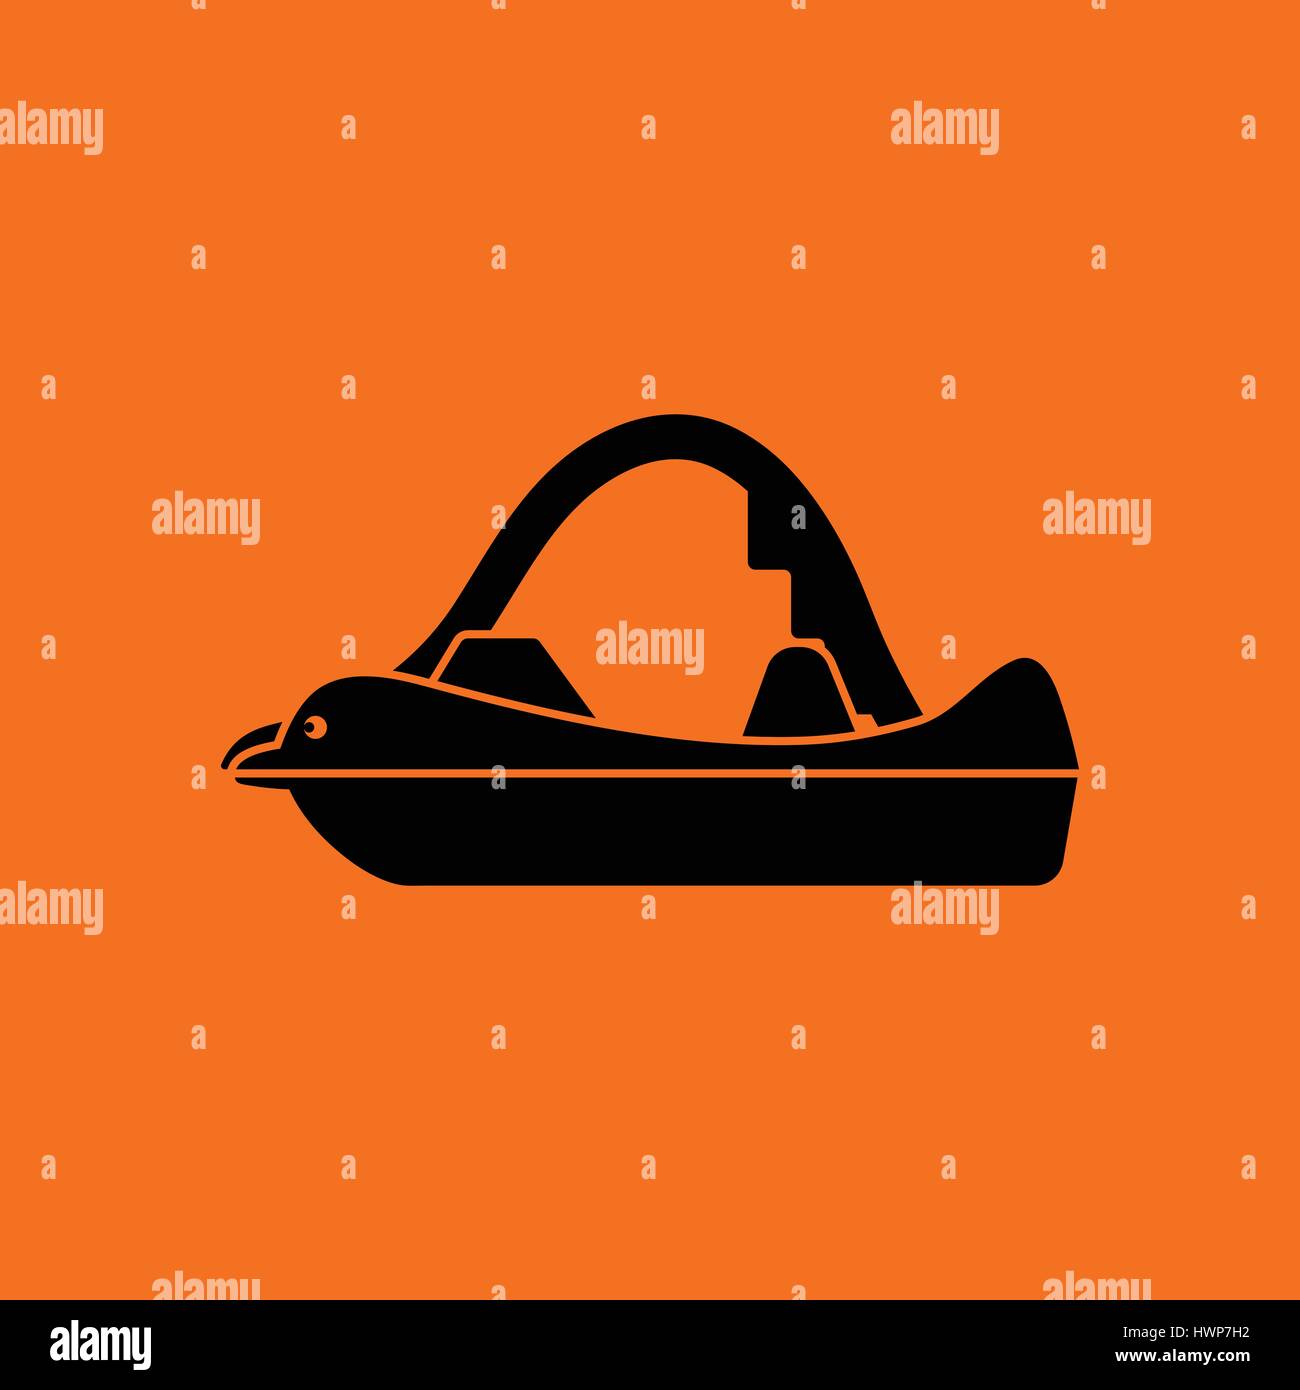 icon. Orange background with black. Vector illustration. Stock Vector